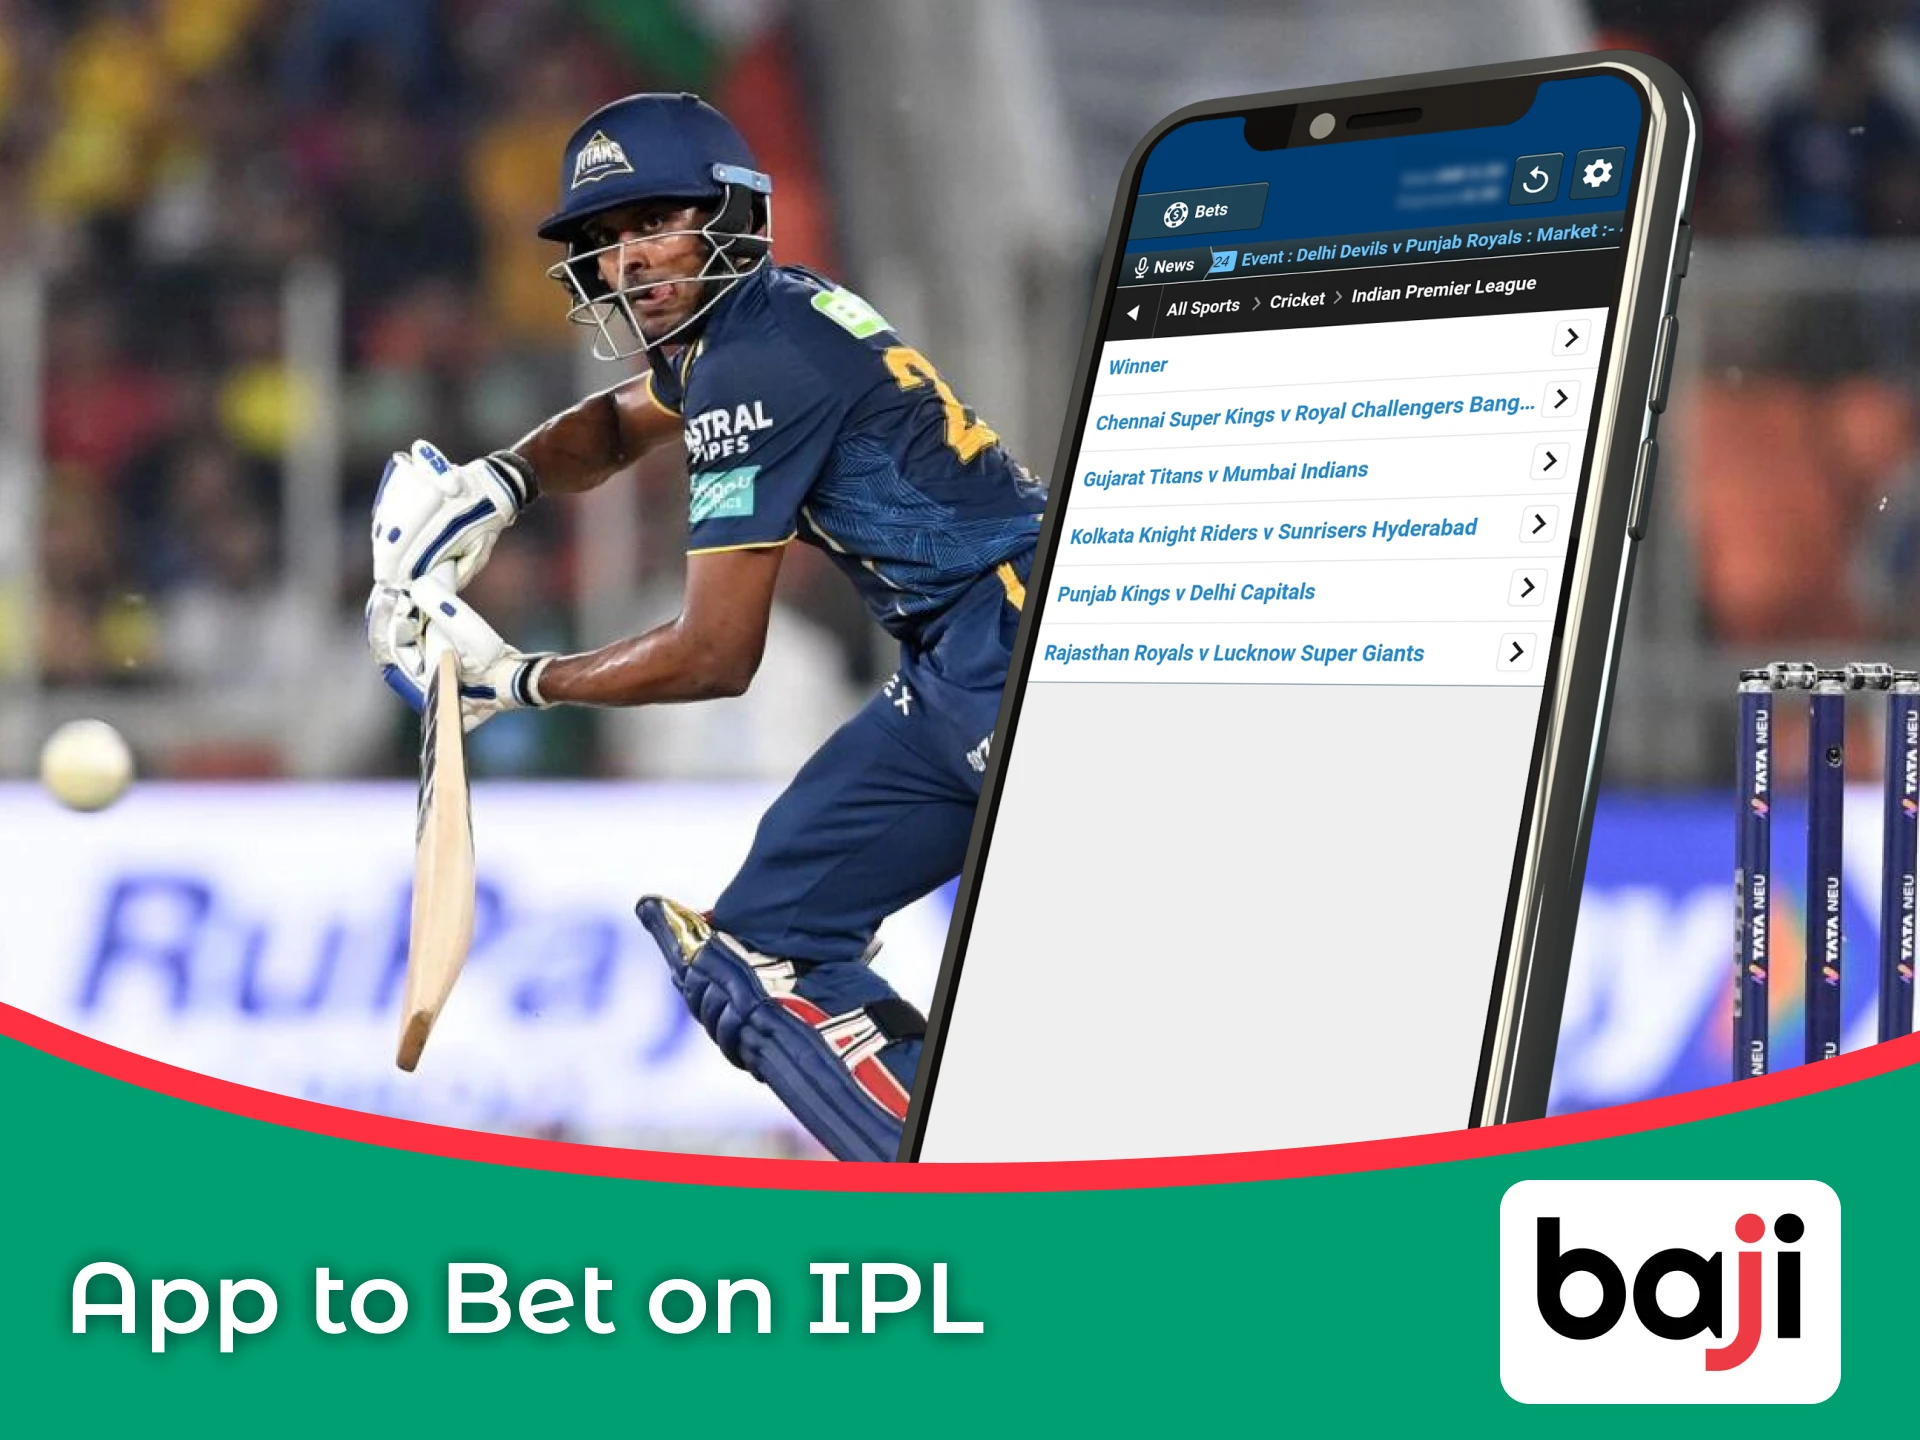 Use Baji app to bet on IPL.